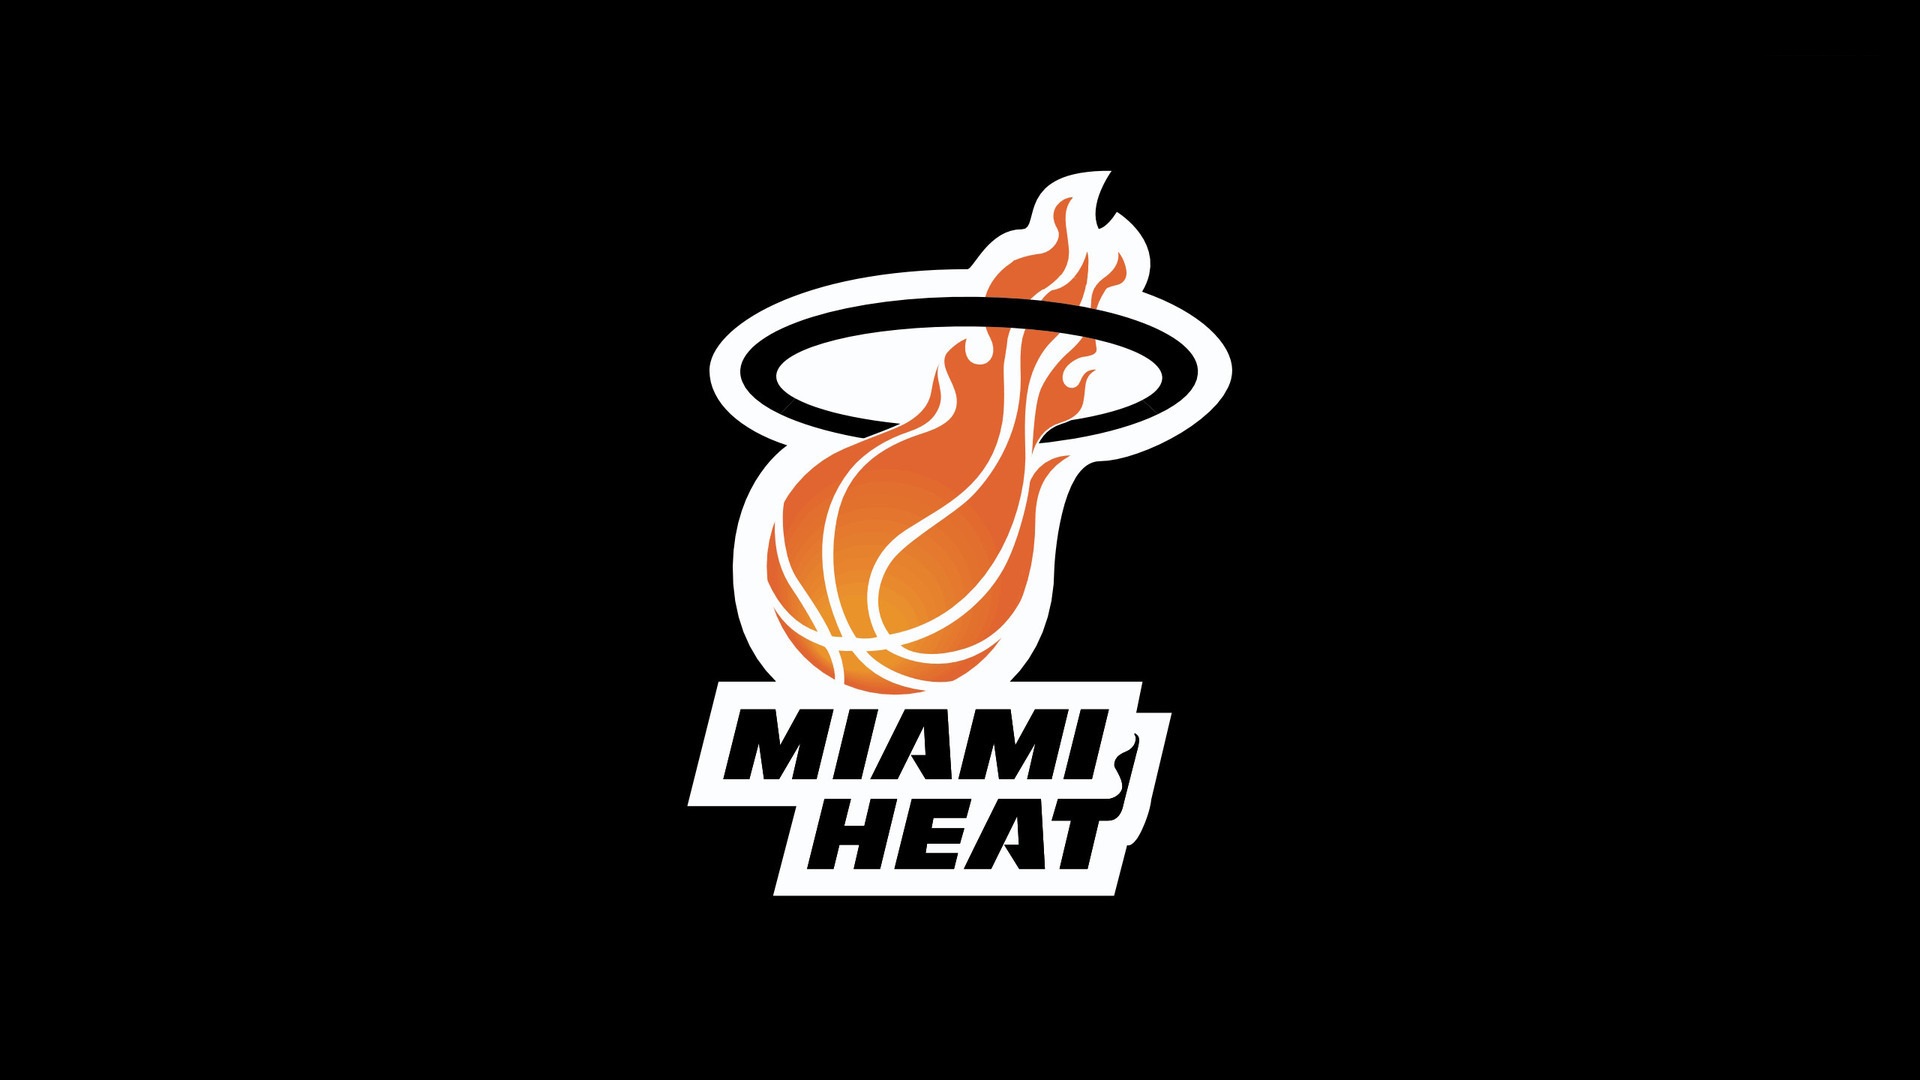 Miami Heat download wallpaper